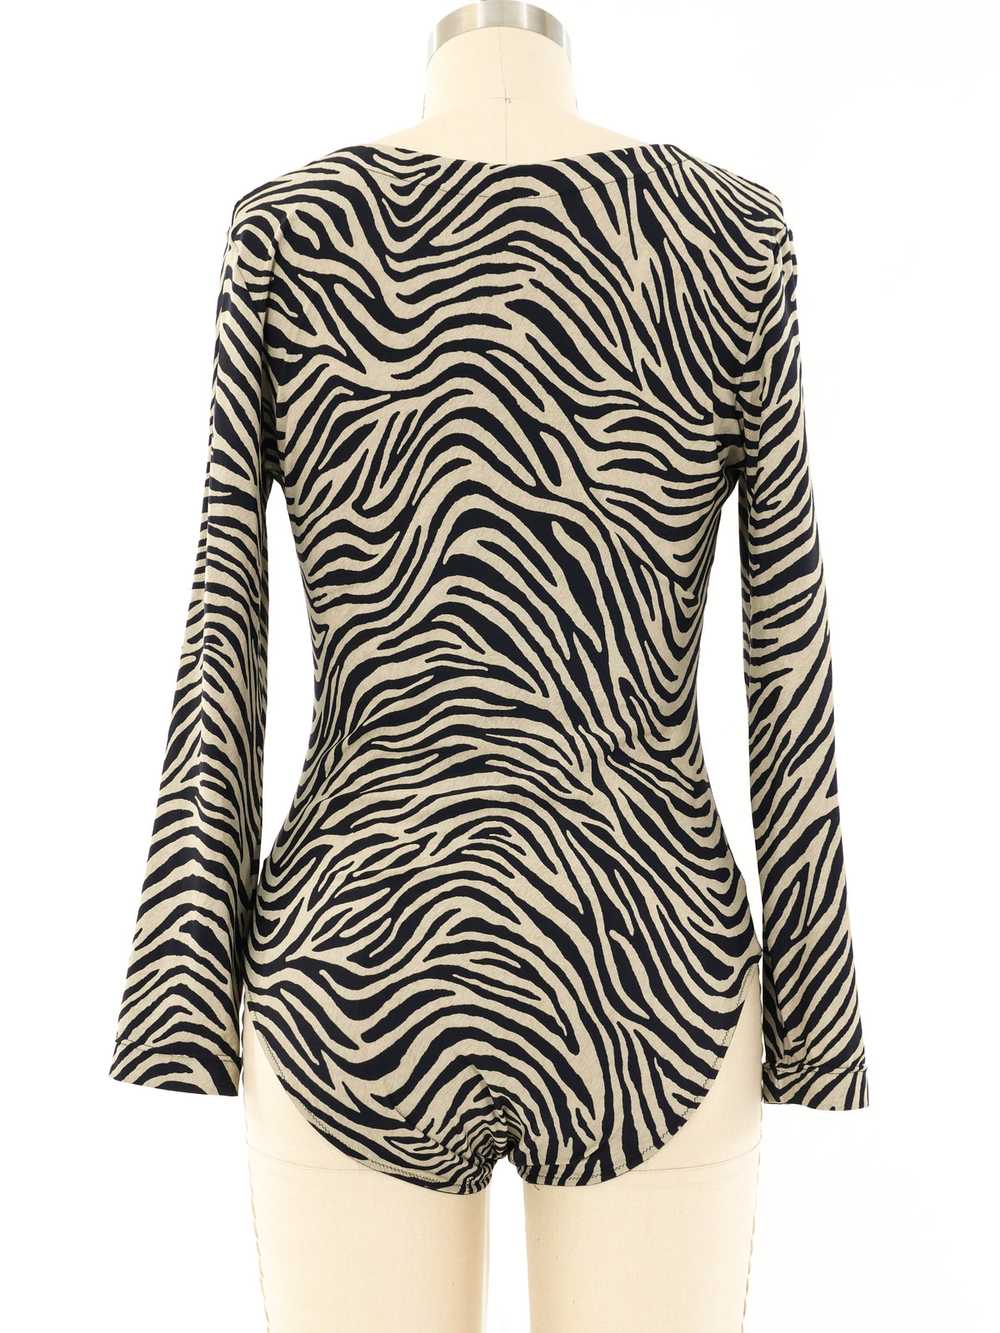 Christian Dior Zebra Print Bodysuit - image 4